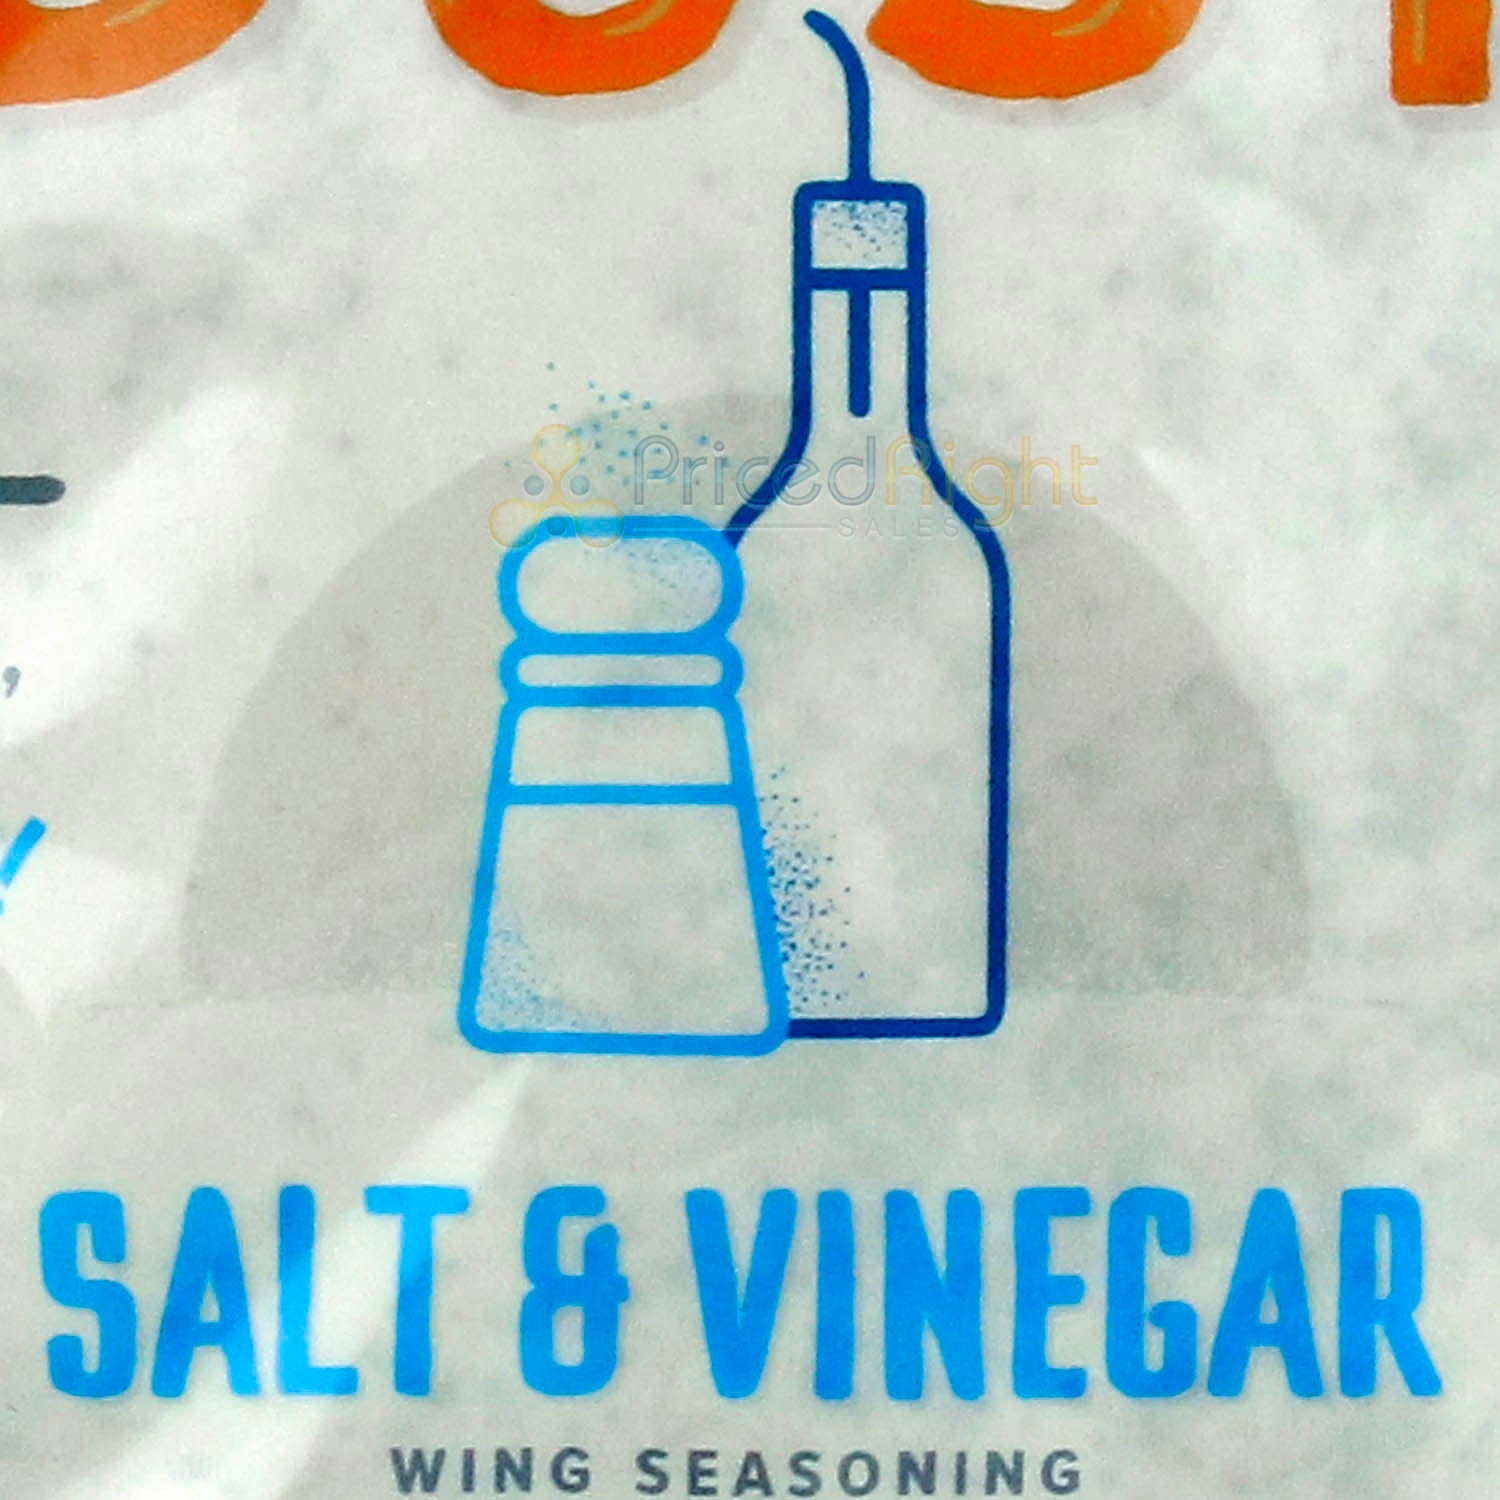 Kosmos Q Salt & Vinegar Wing Dust, Chicken 8 Ounce (Pack of 1)